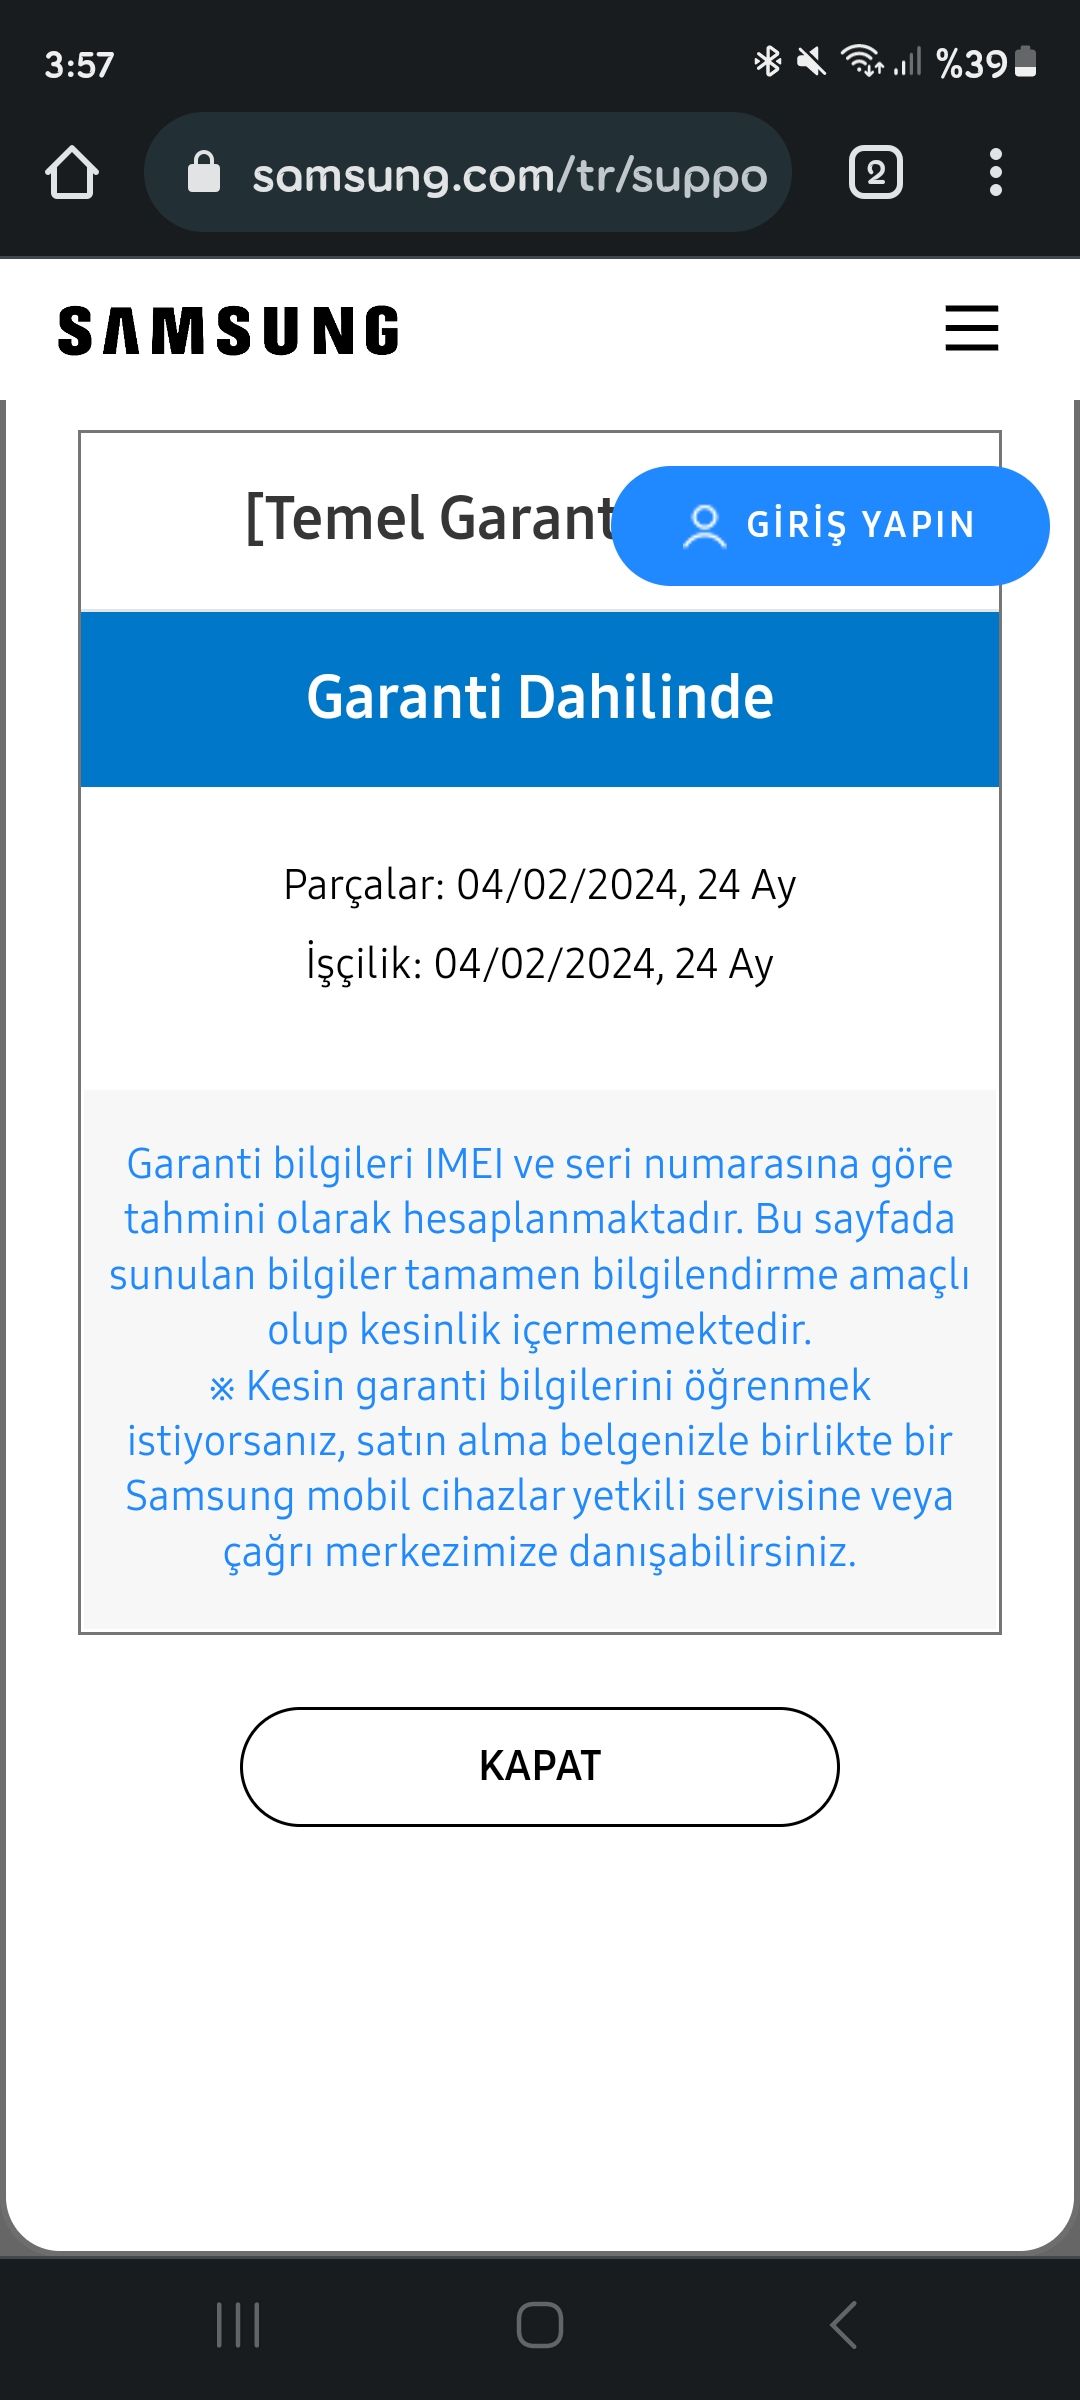 Solved: Samsung Garanti Aktivasyon Hatası - Samsung Members